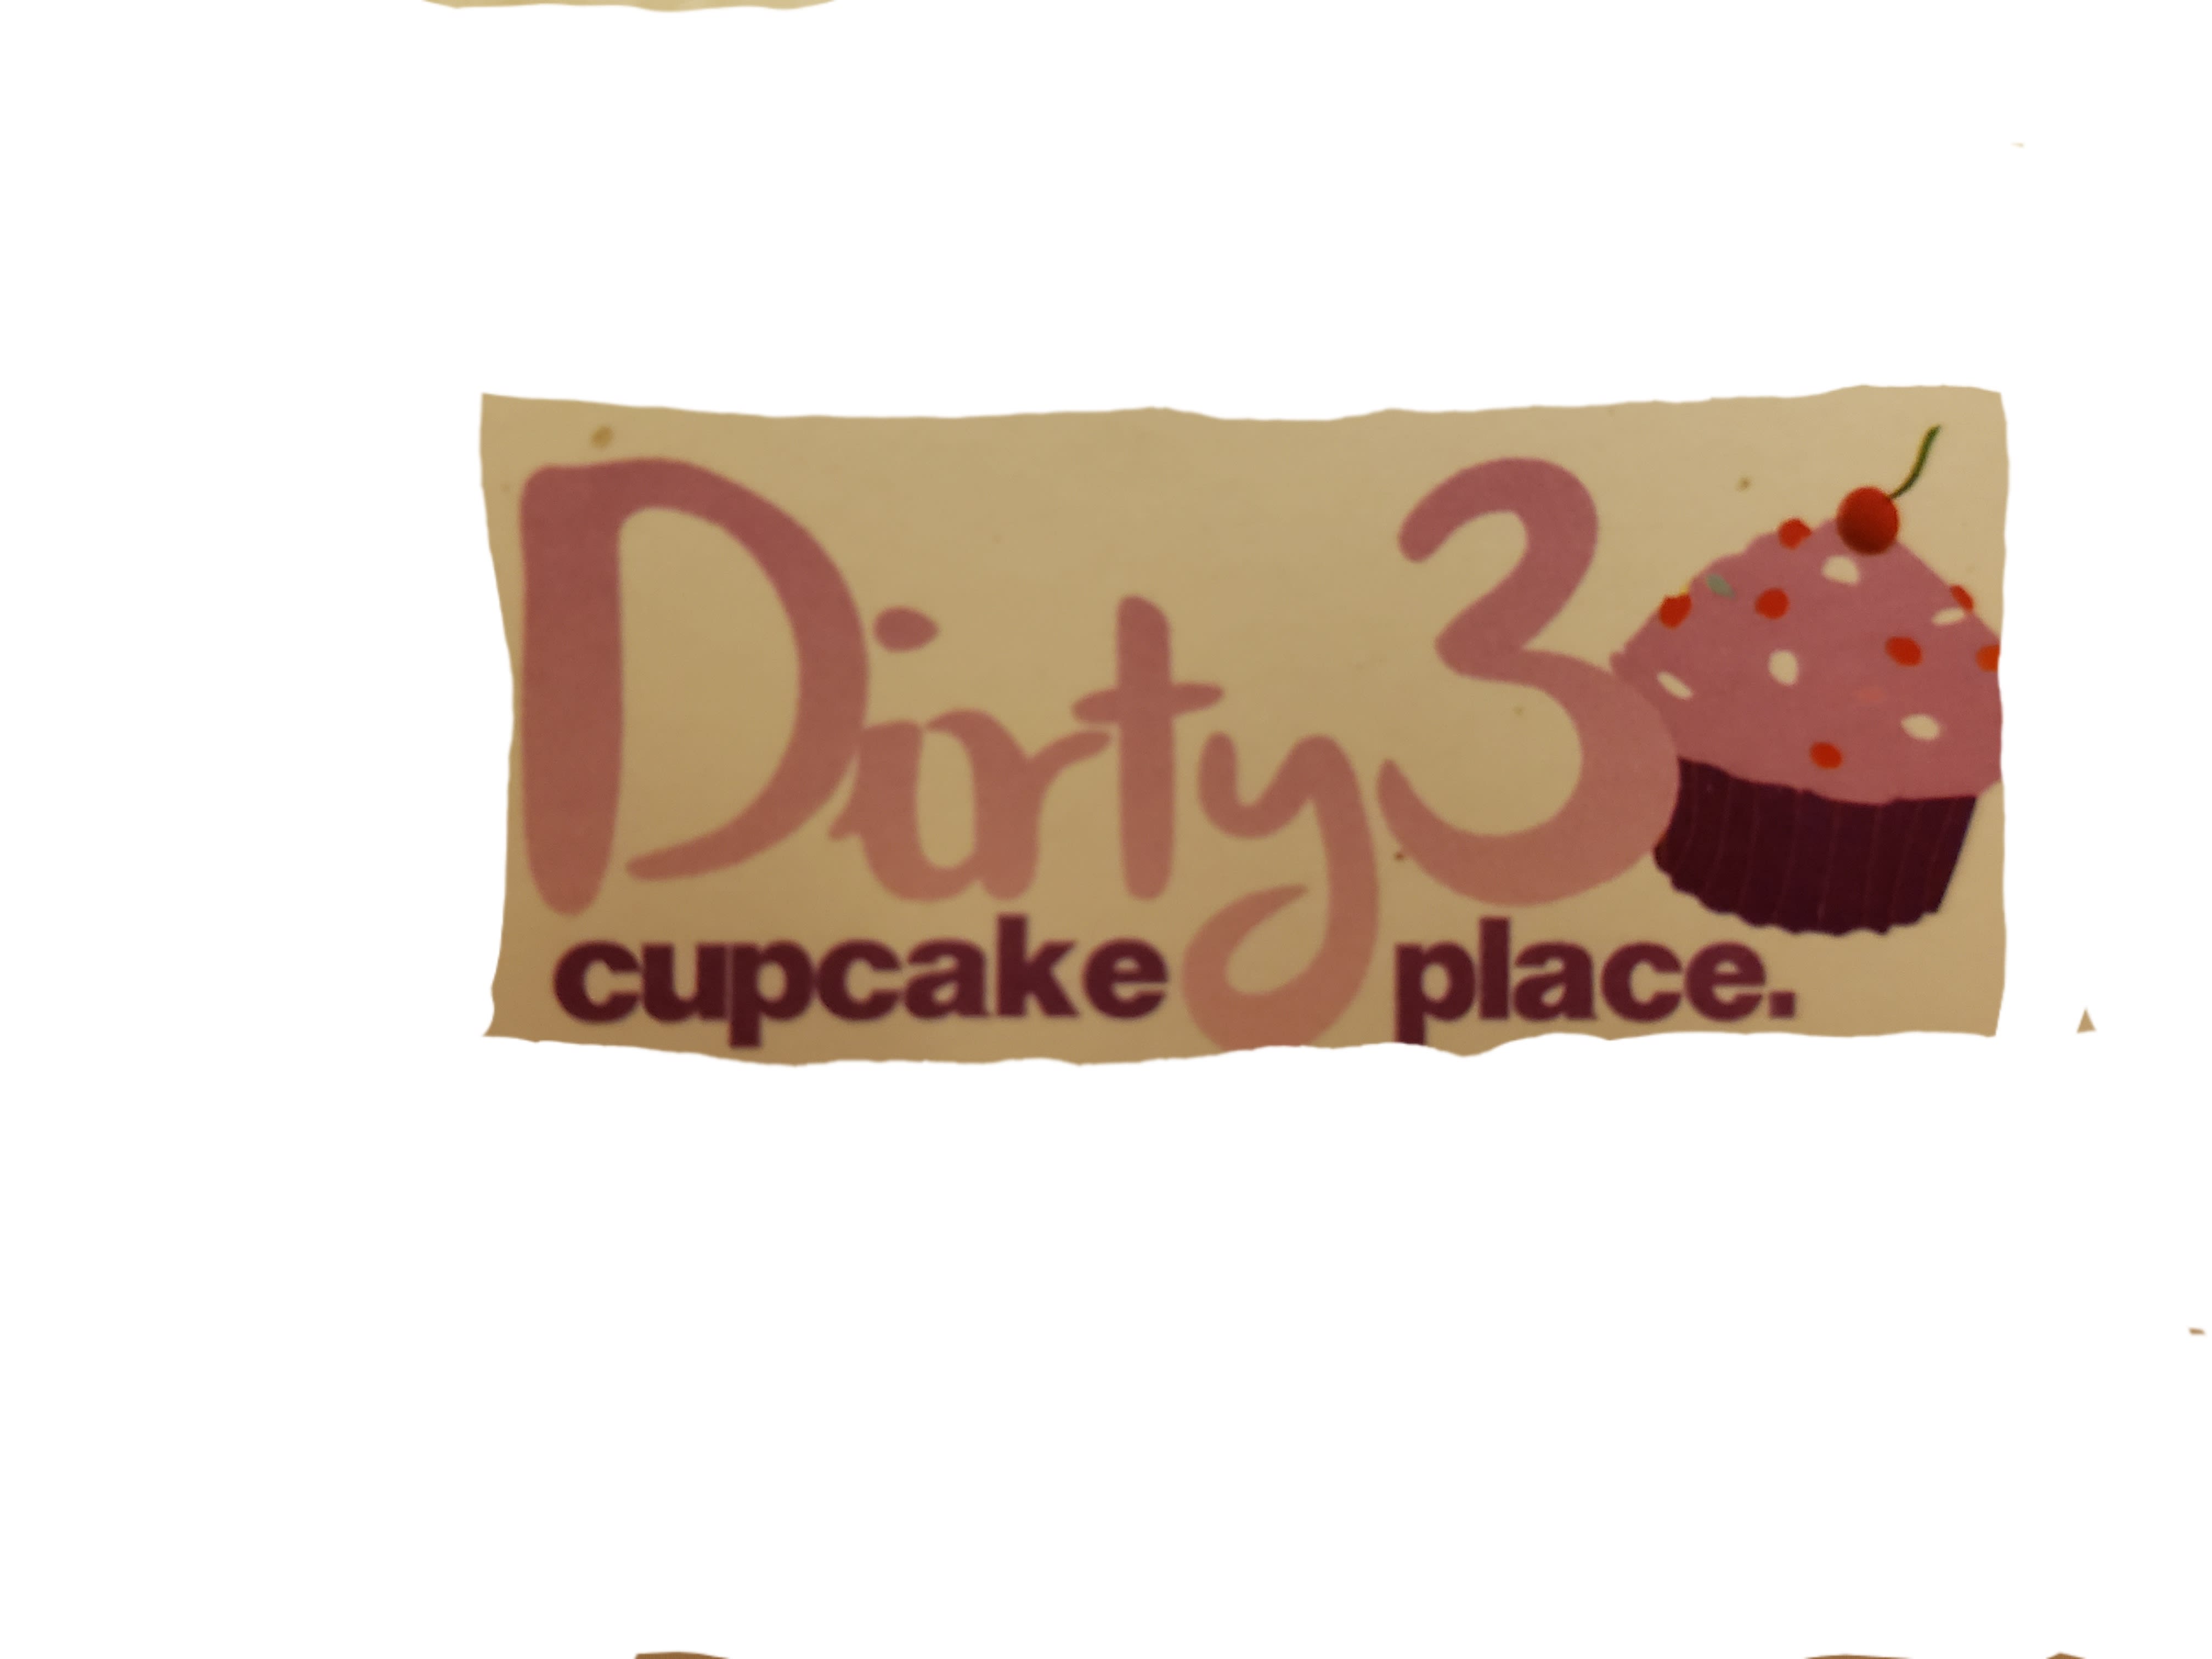 Dirty 30 Cupcake Place